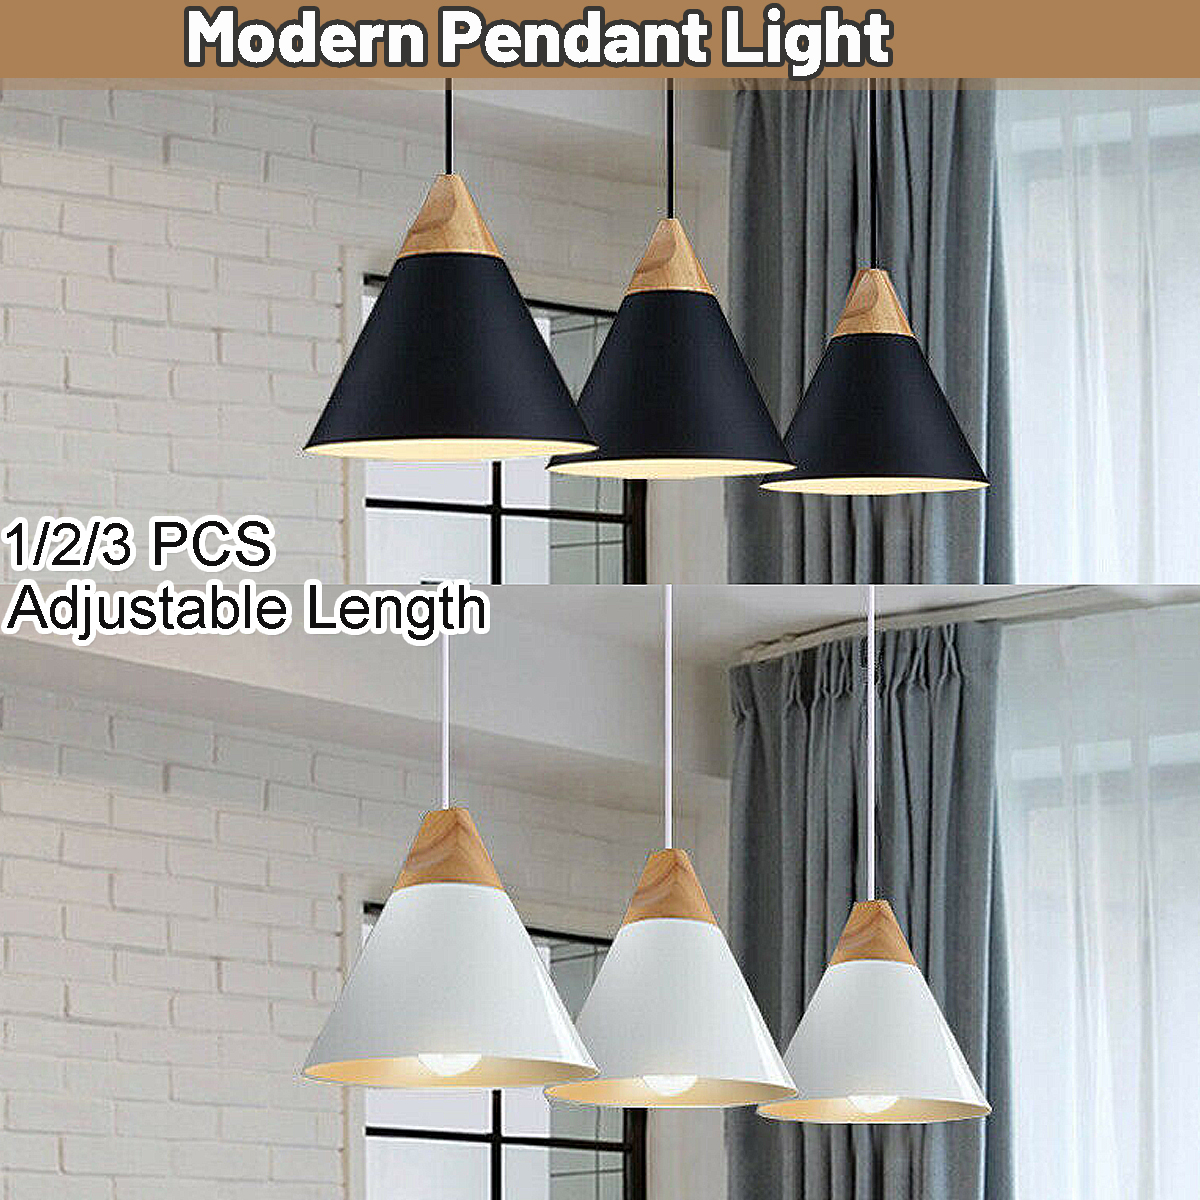 Modern-Pendant-Lighting-Nordic-Minimalist-Pendant-Lights-Over-Dining-Table-Kitchen-Island-Hanging-La-1786441-4